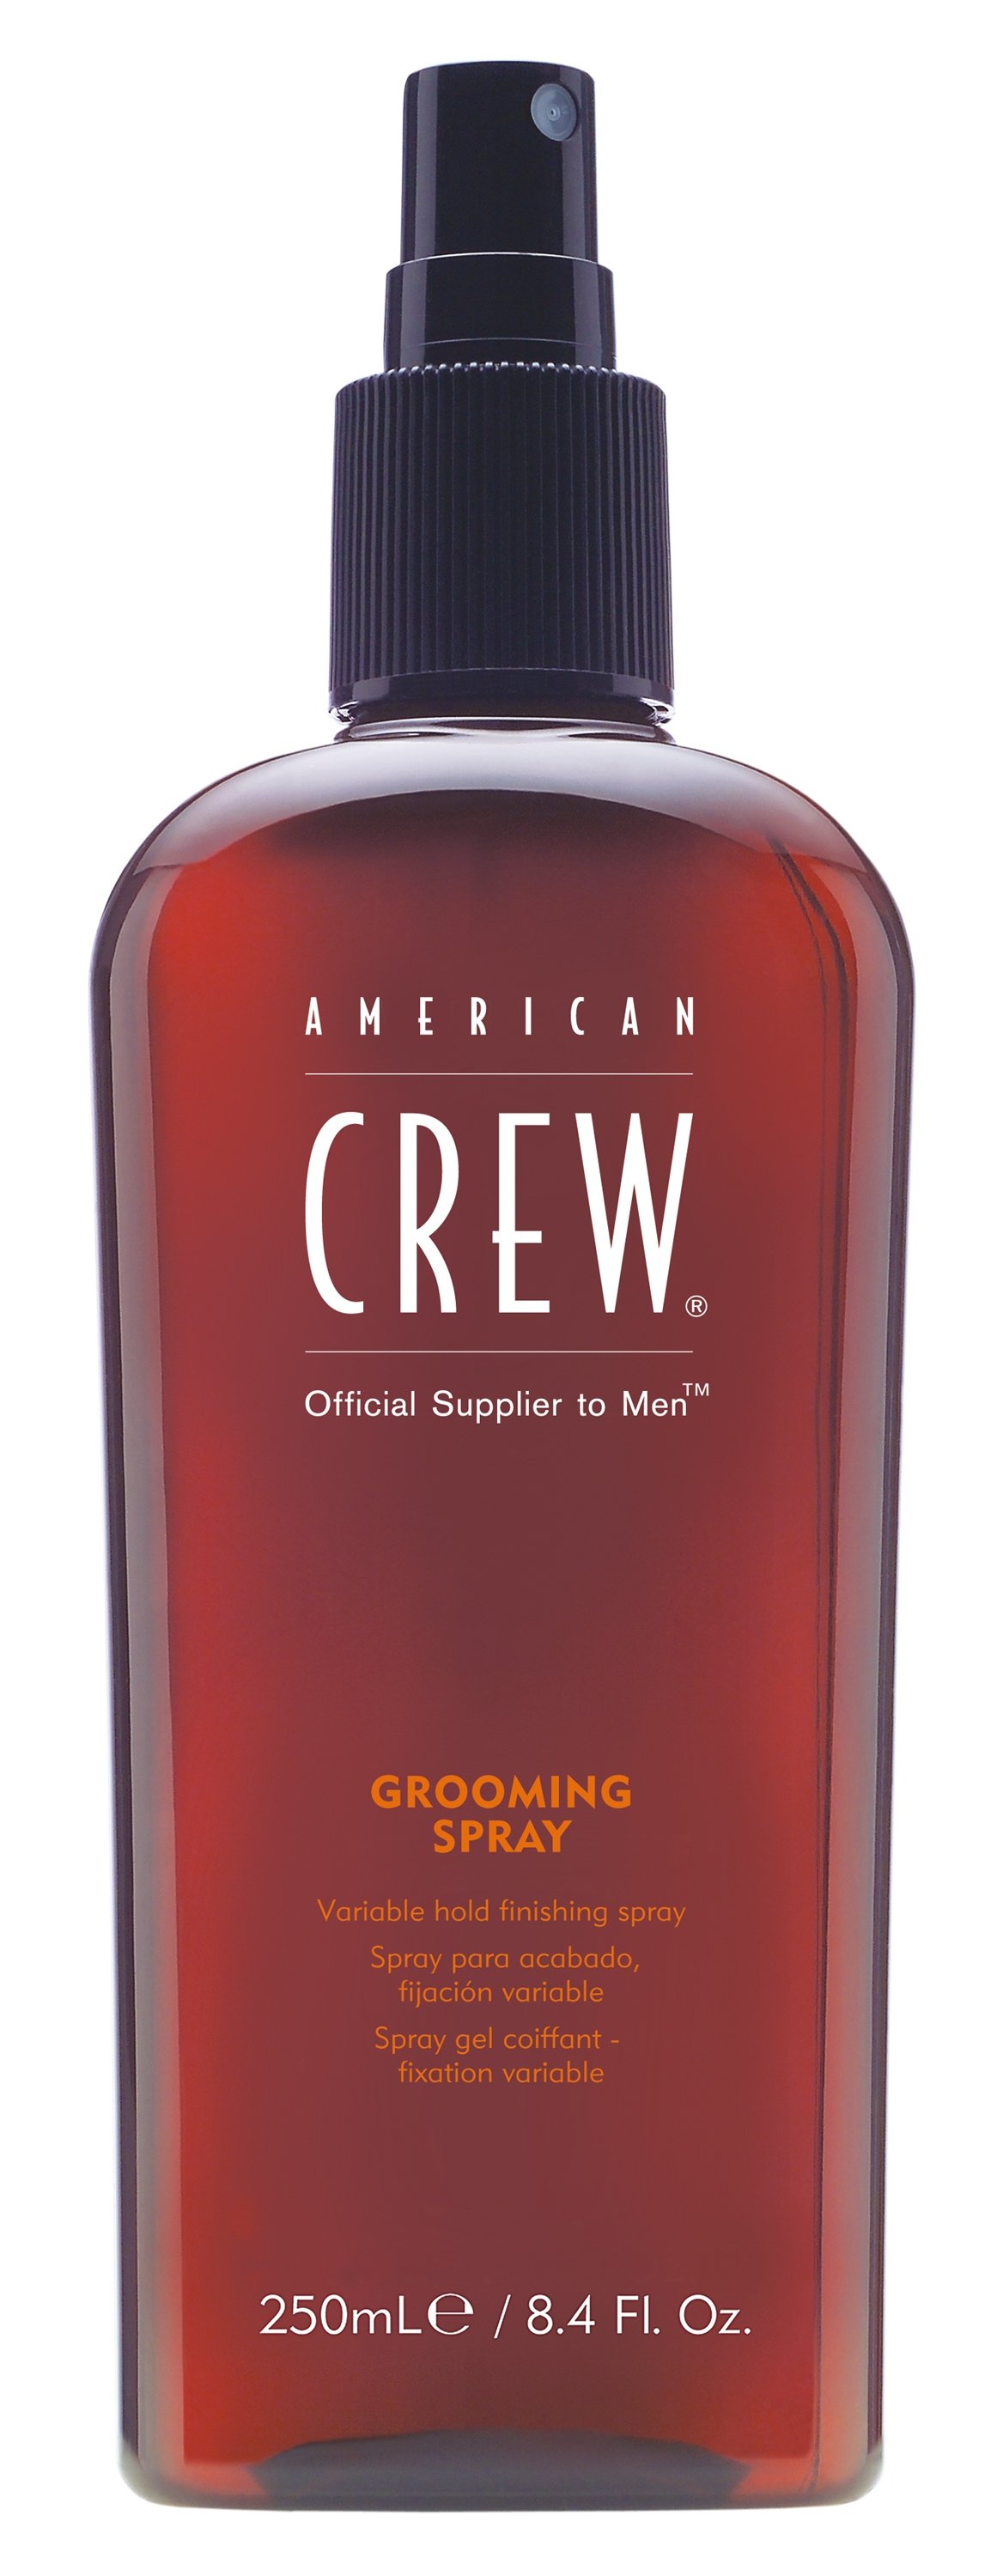 Мужские средства для укладки волос:  AMERICAN CREW -  Спрей для финальной укладки волос American Crew Grooming Spray (250 мл) (250 мл)